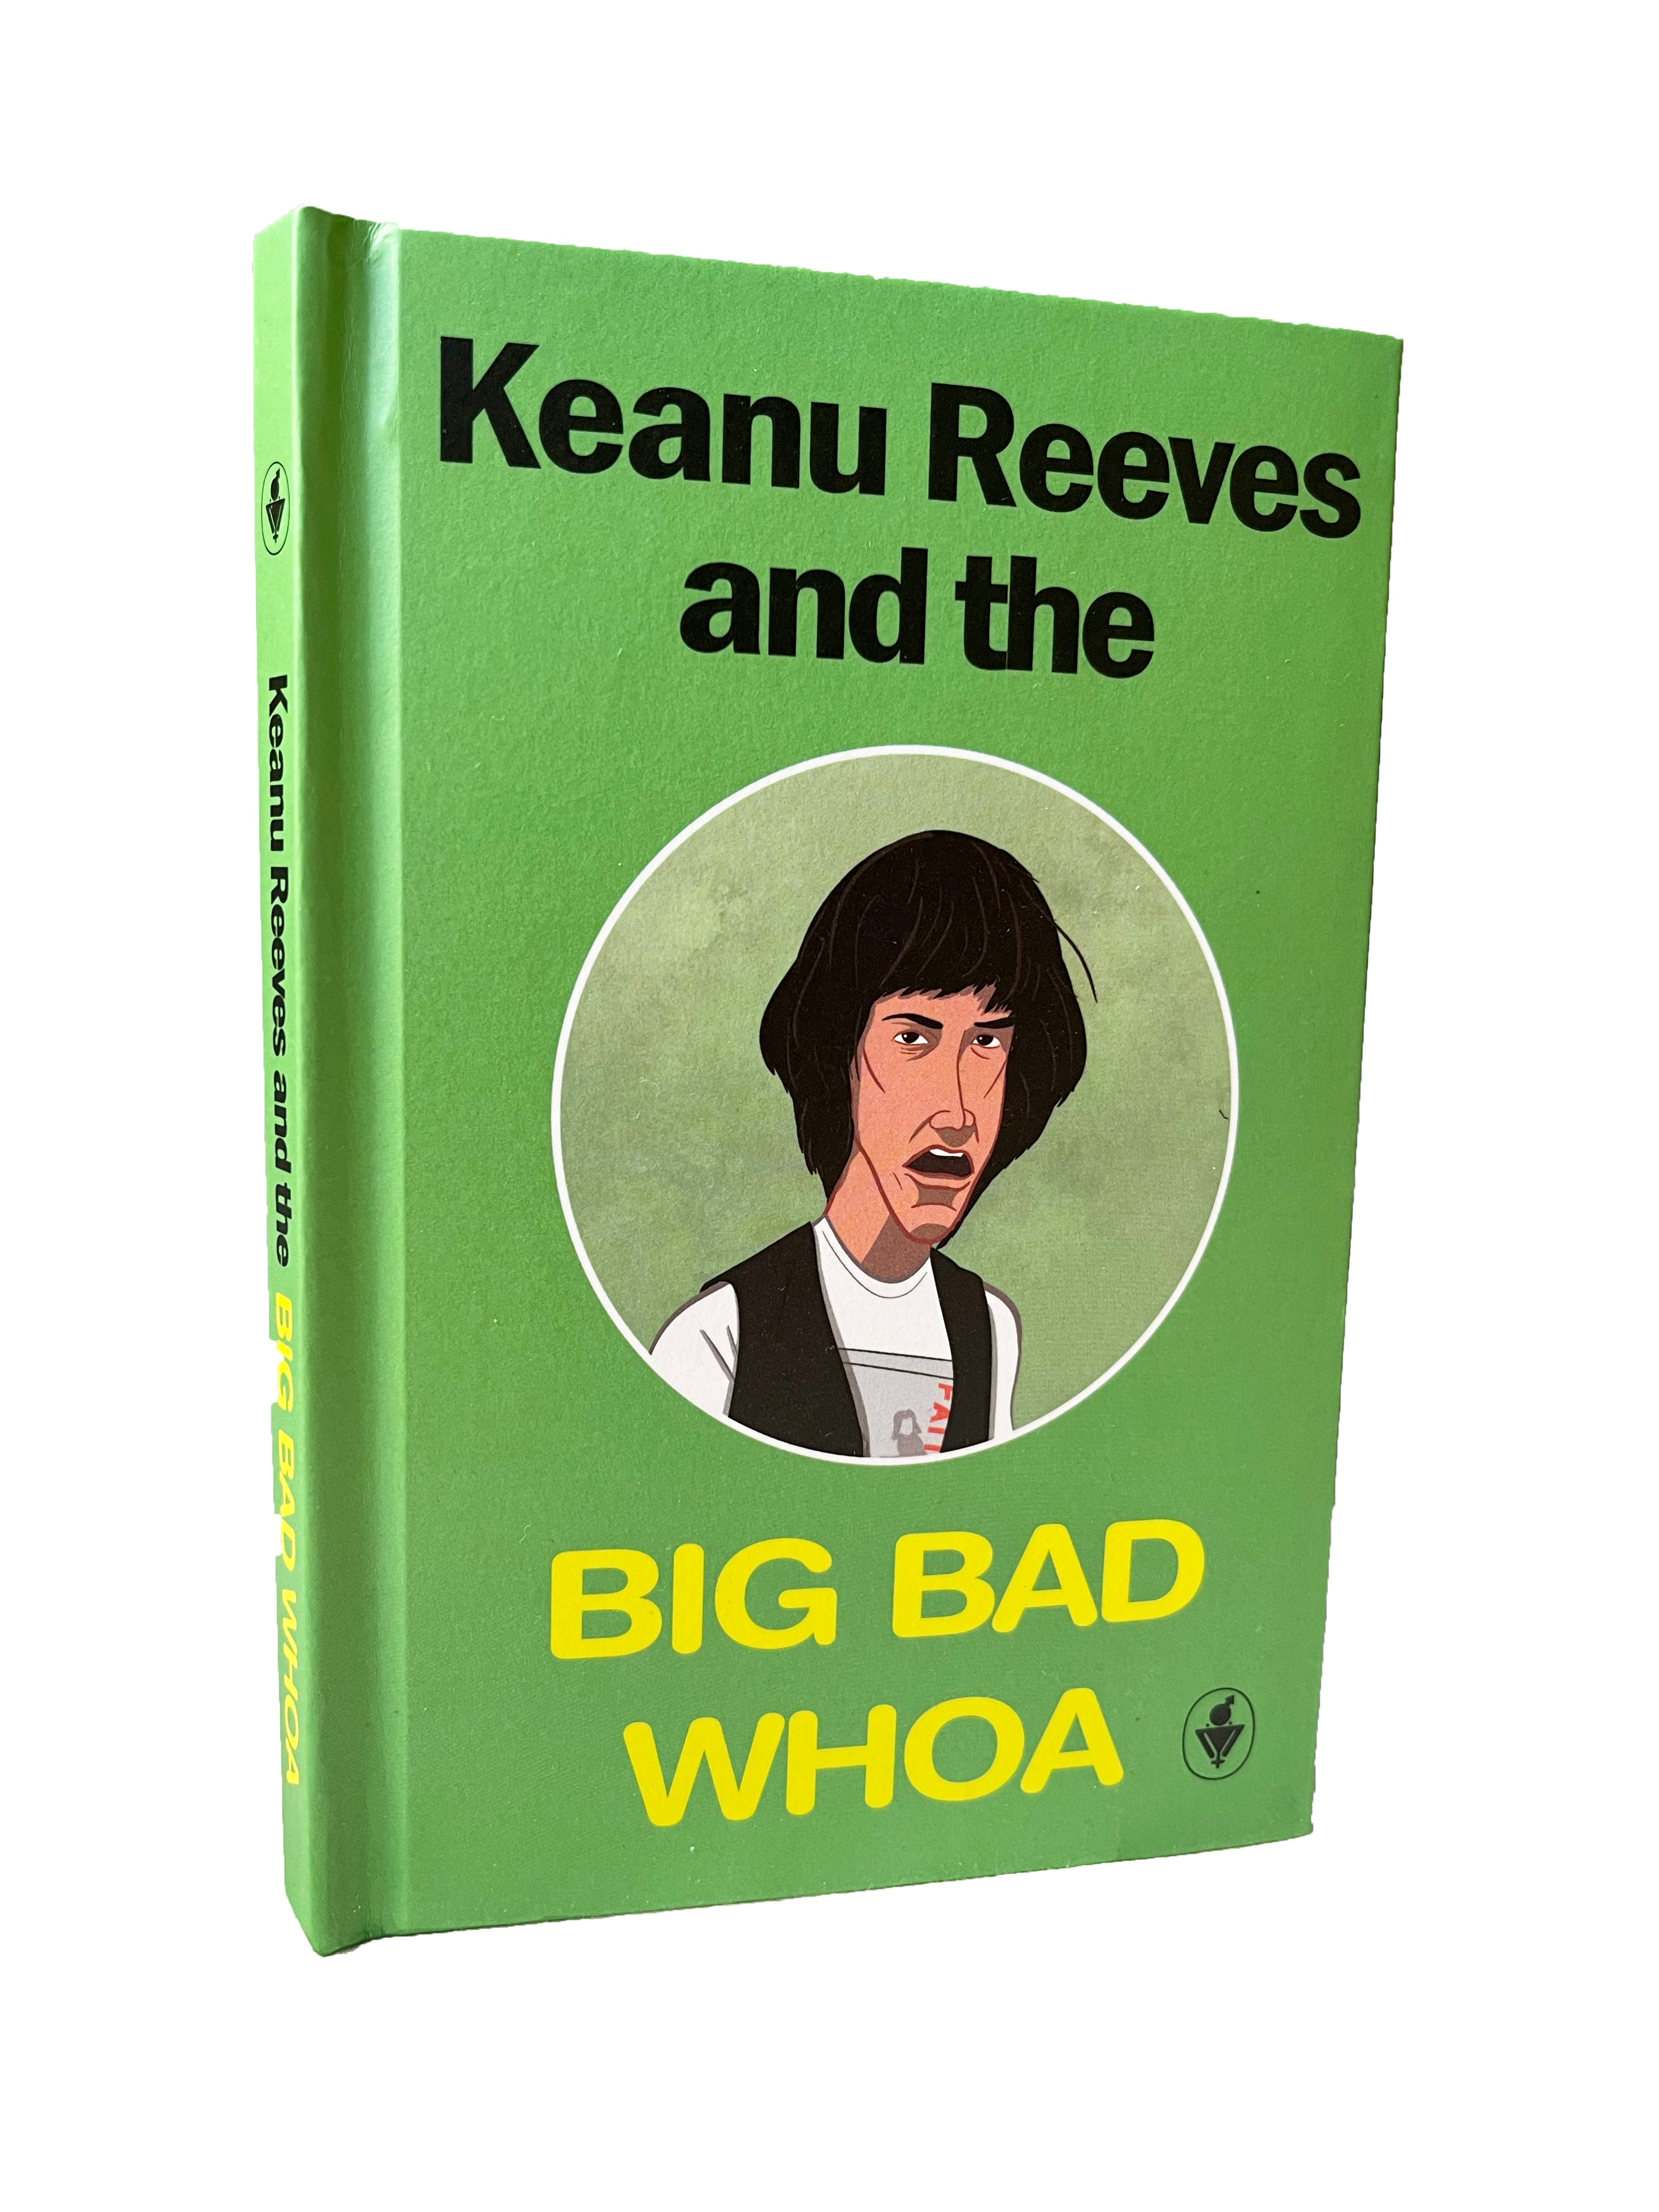 Keanu Reeves and the Big Bad Whoa